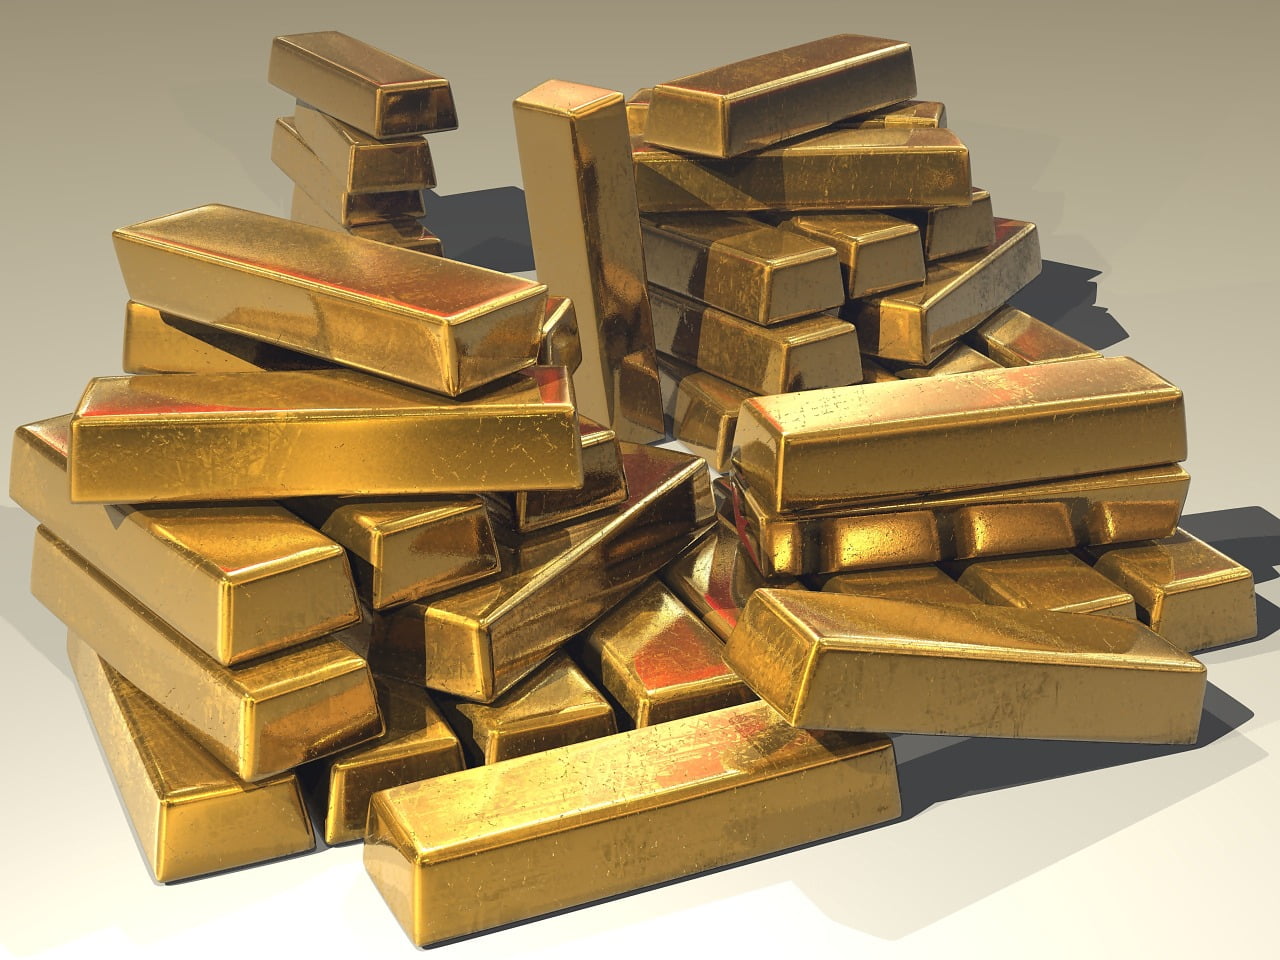 Nunca ha sido tan fácil comprar oro como con BullionVault